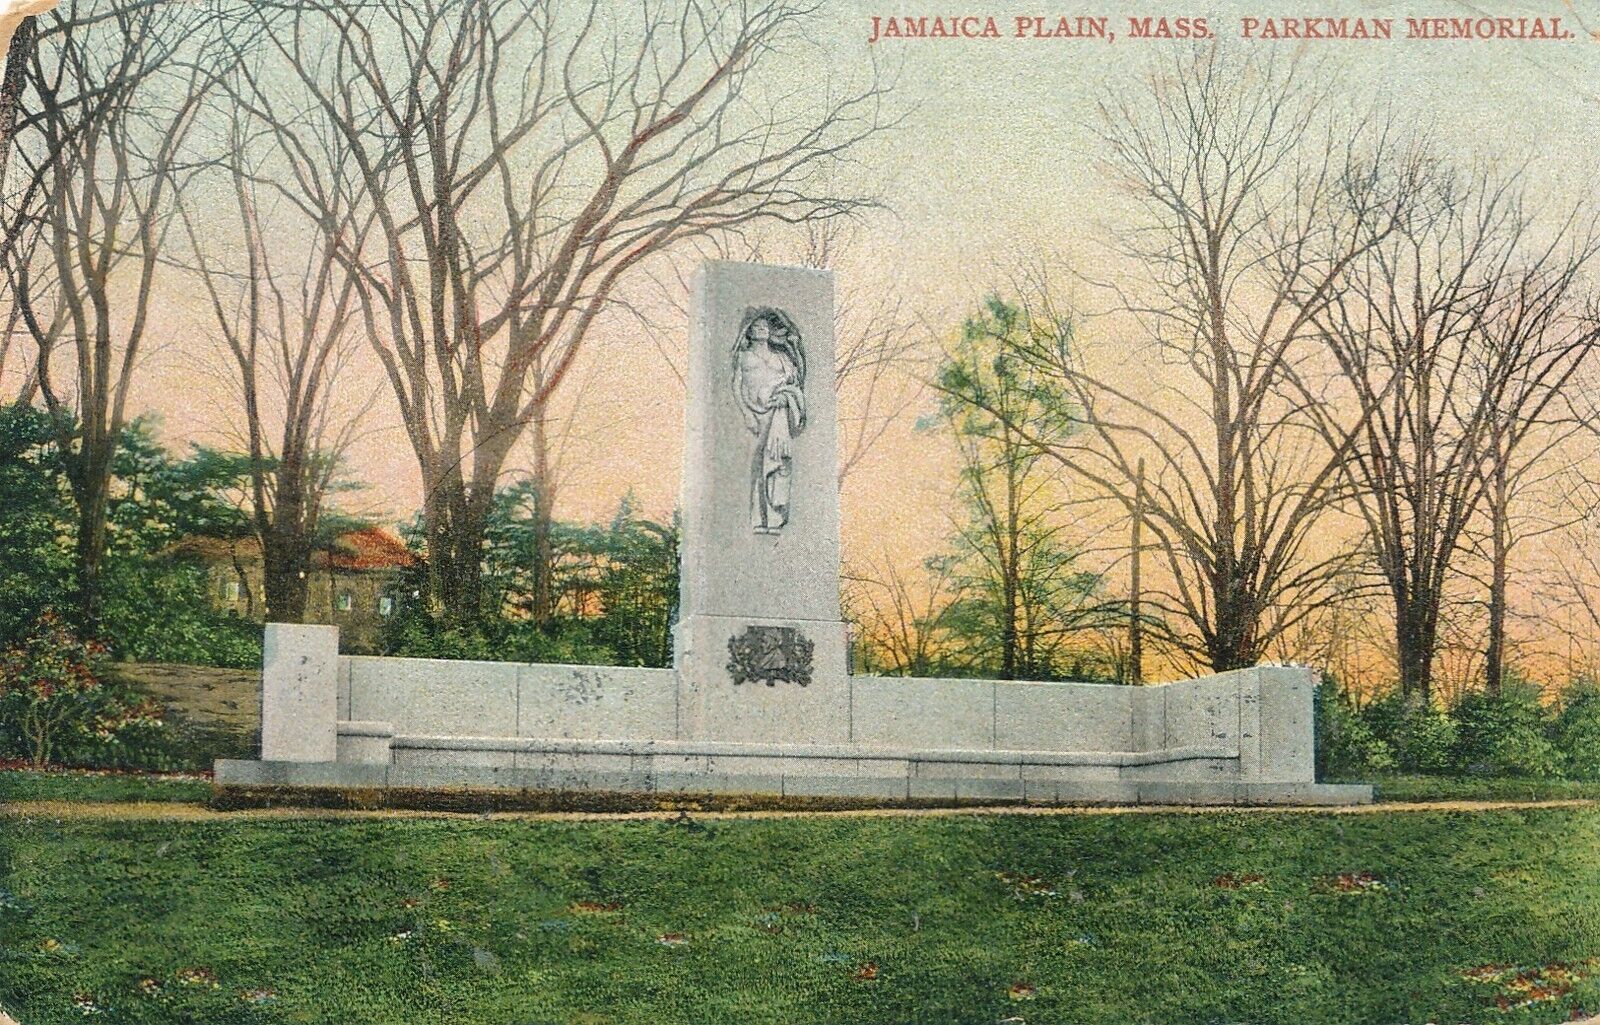 BOSTON MA – Parkman Memorial – Jamaica Plain - 1911